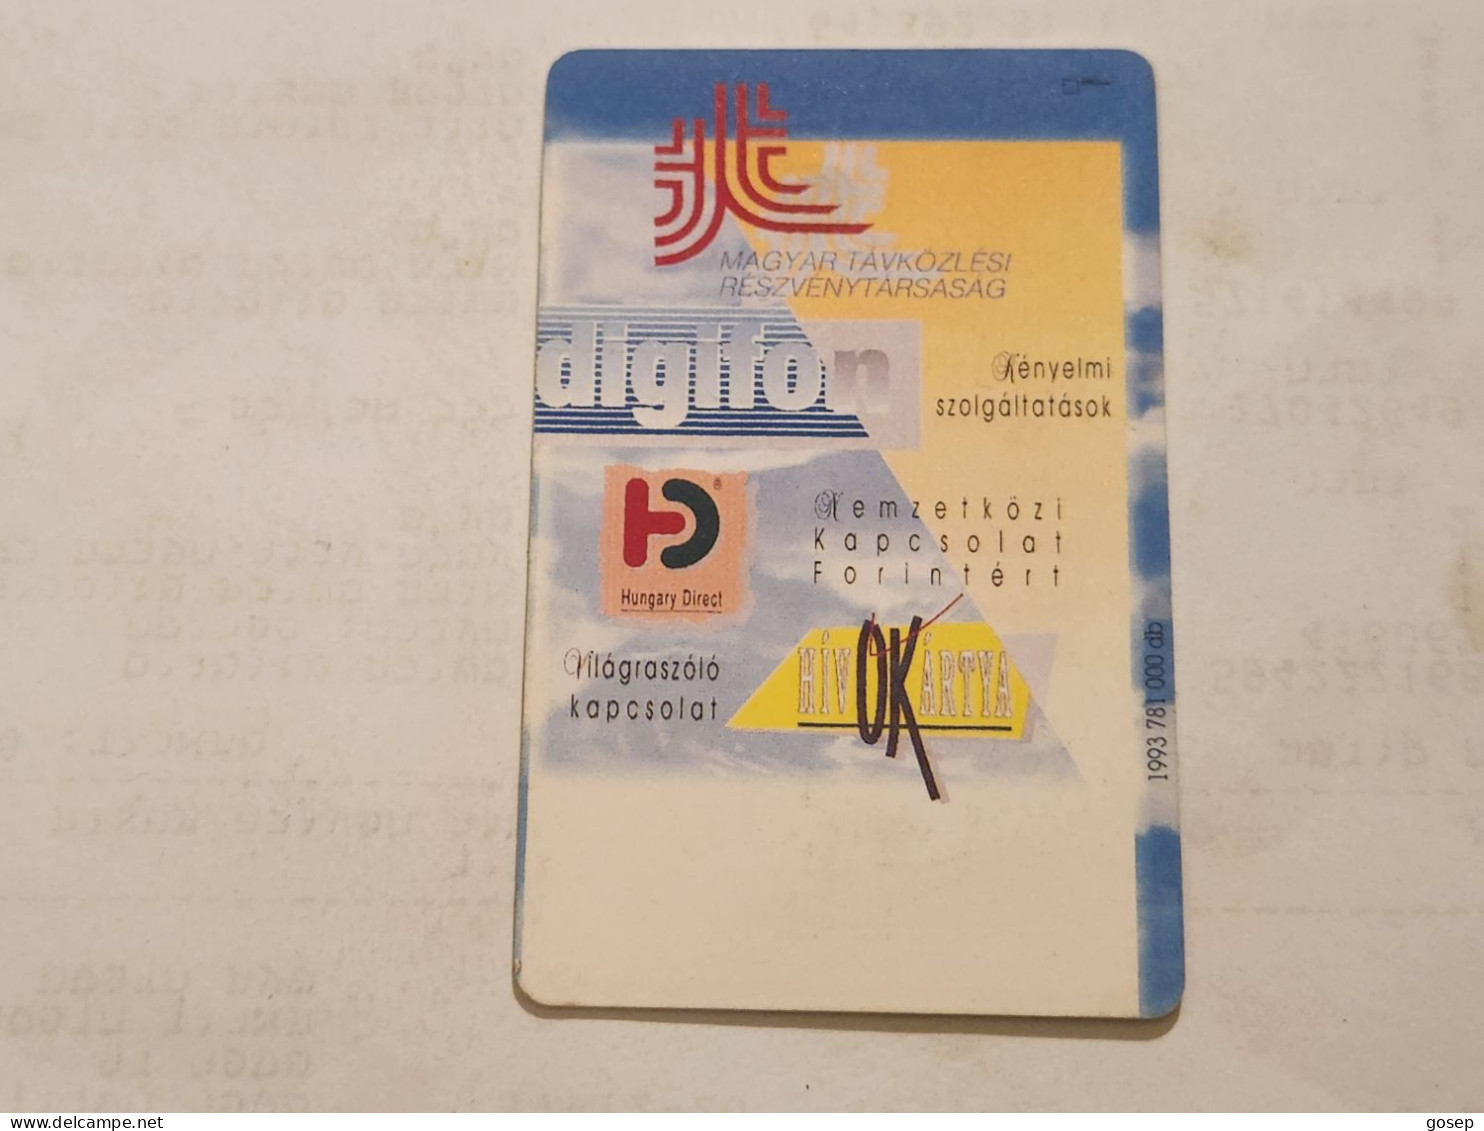 HUNGARY-(HU-P-1993-32Aa)-MATAV-(177)(500units)(11/93)(tirage-781.000)-USED CARD+1card Prepiad Free - Ungheria